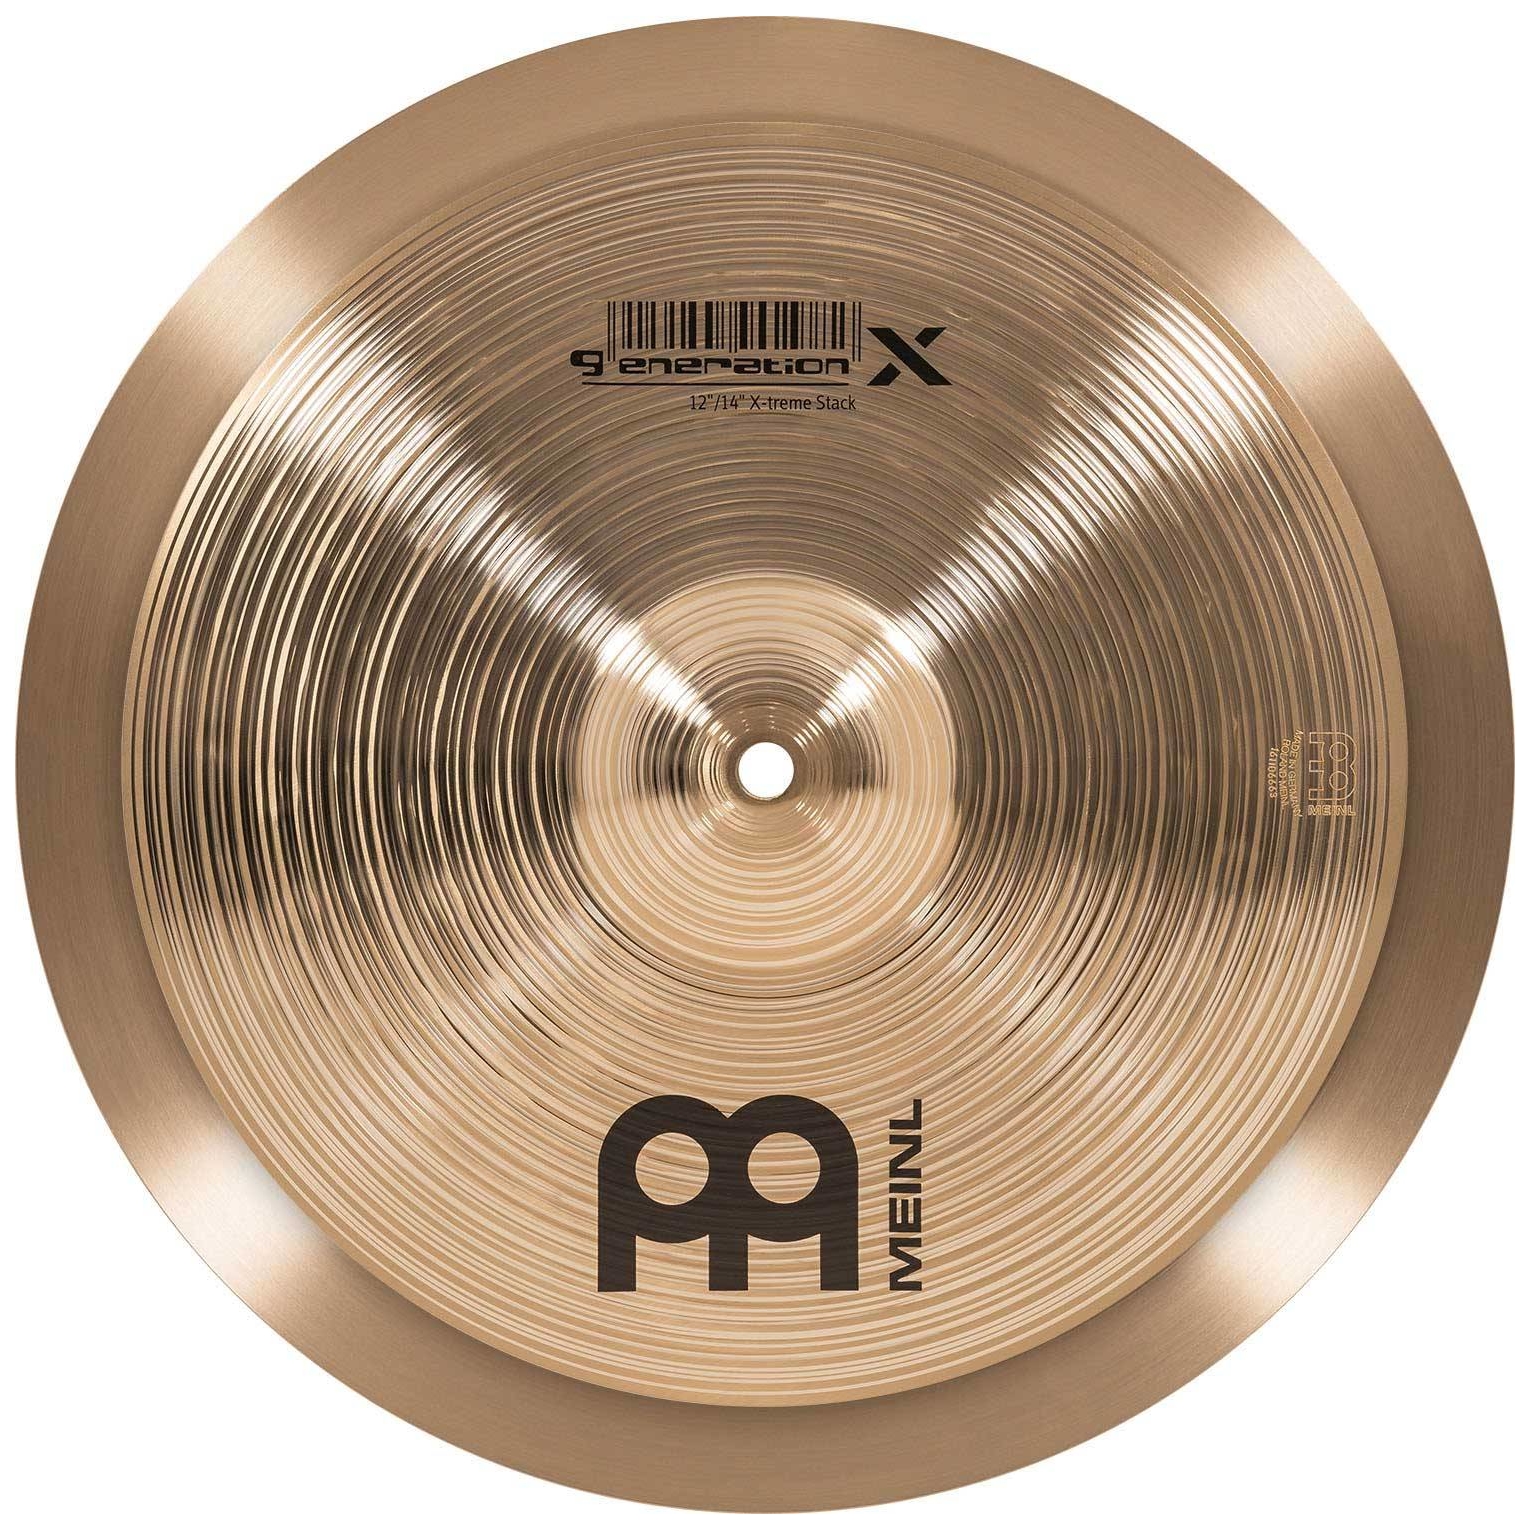 Meinl Cymbals GX-12/14XTS - 12"/14" Generation X X-treme Stack 